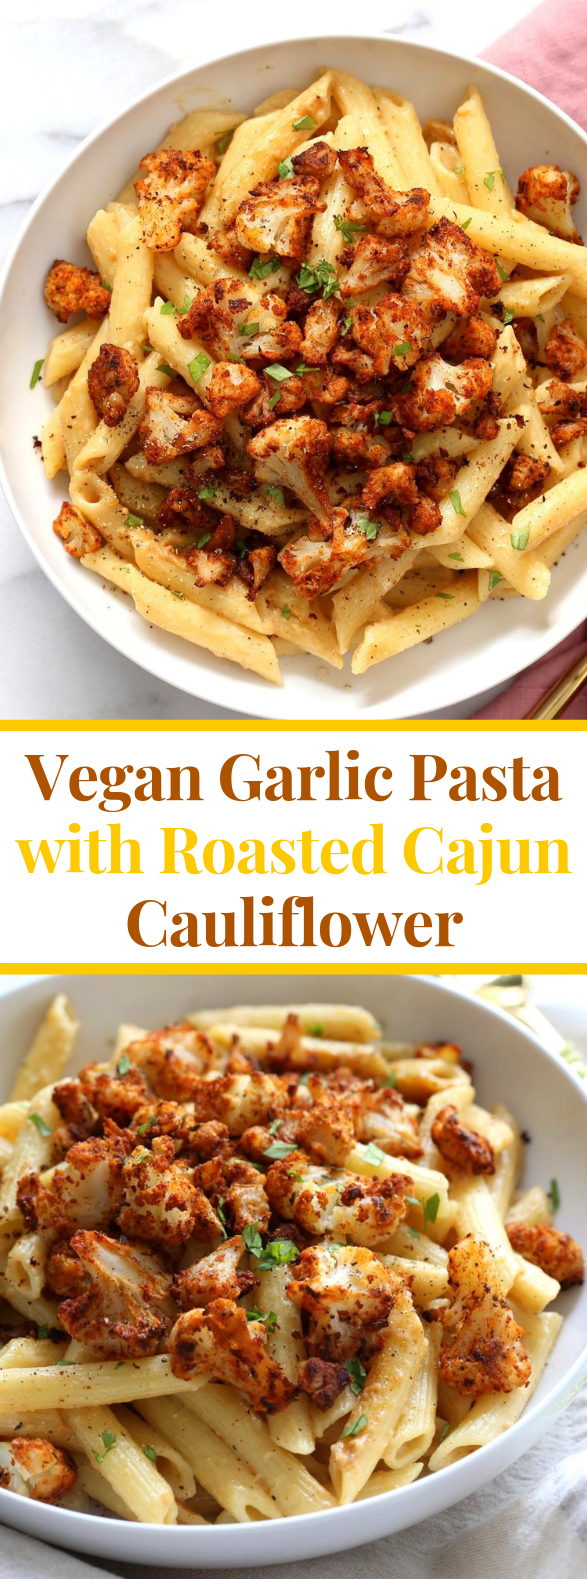 Vegan Garlic Pasta with Roasted Cajun Cauliflower #veganrecipe #glutenfree